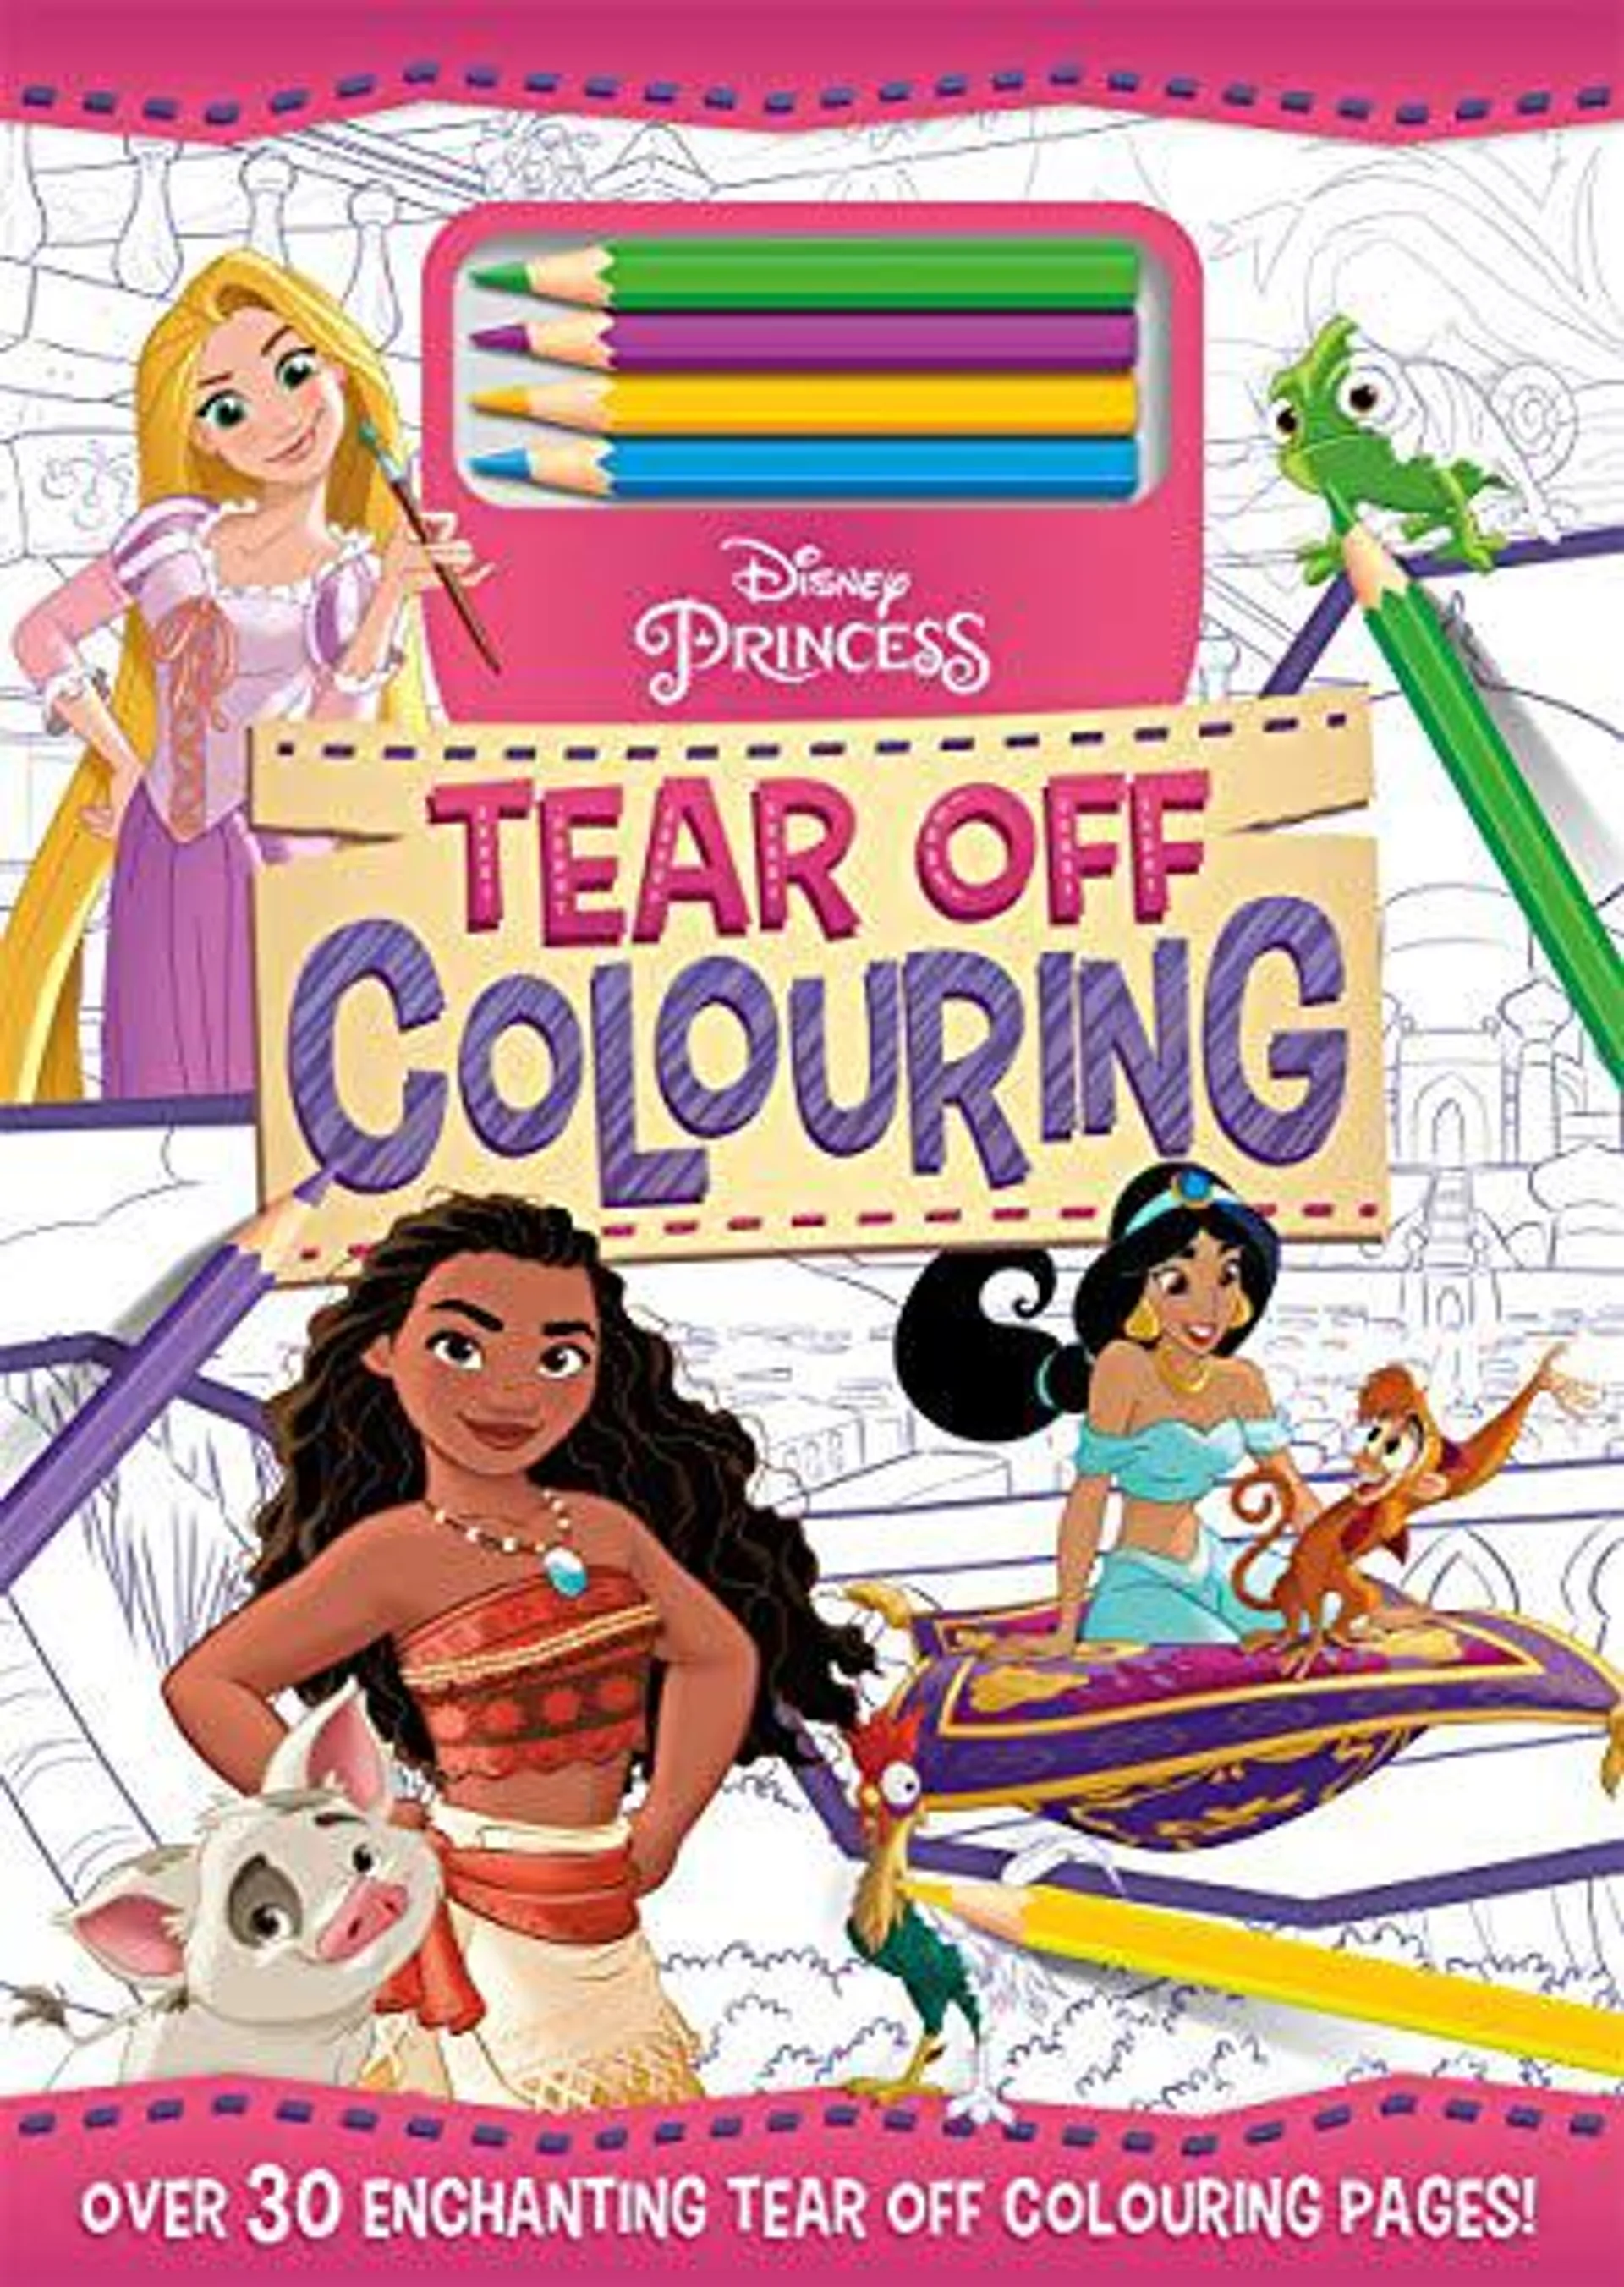 Disney Princess: Tear Off Colouring by Igloo Books